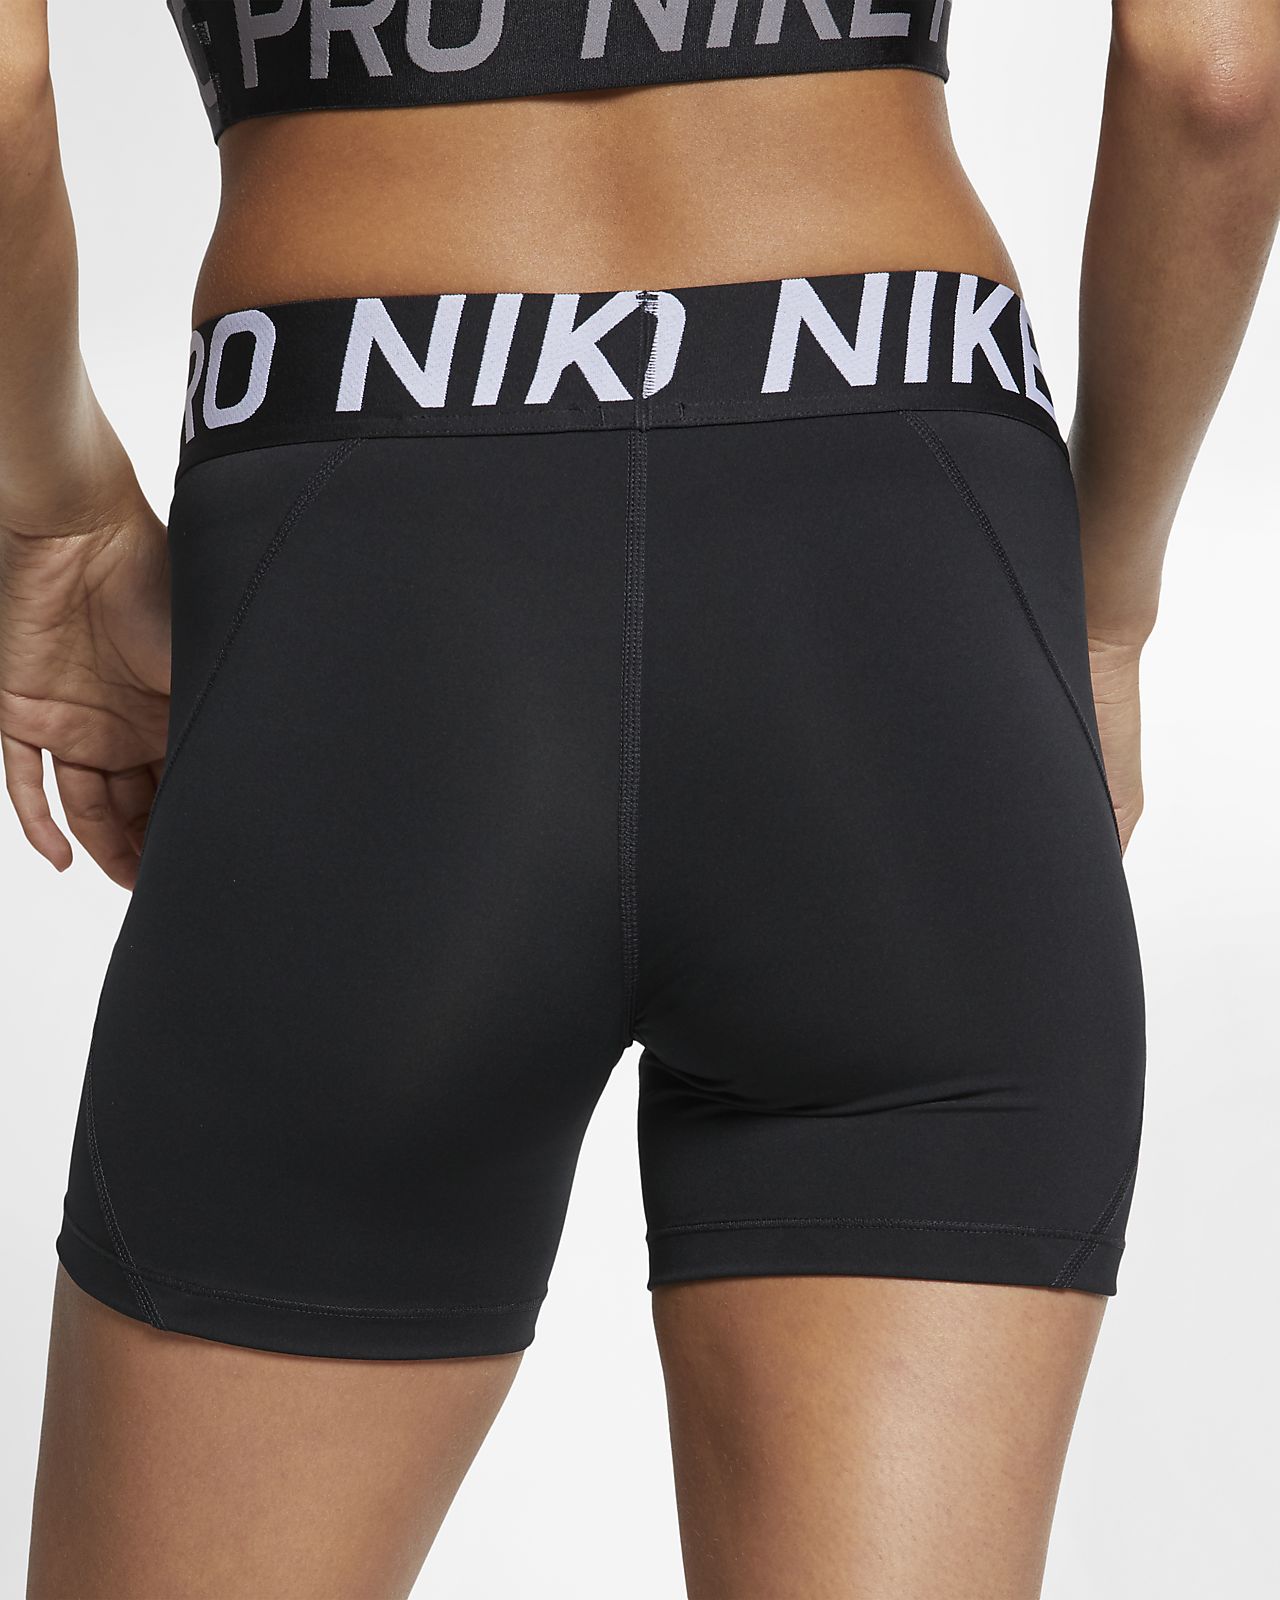 nike 5 compression shorts